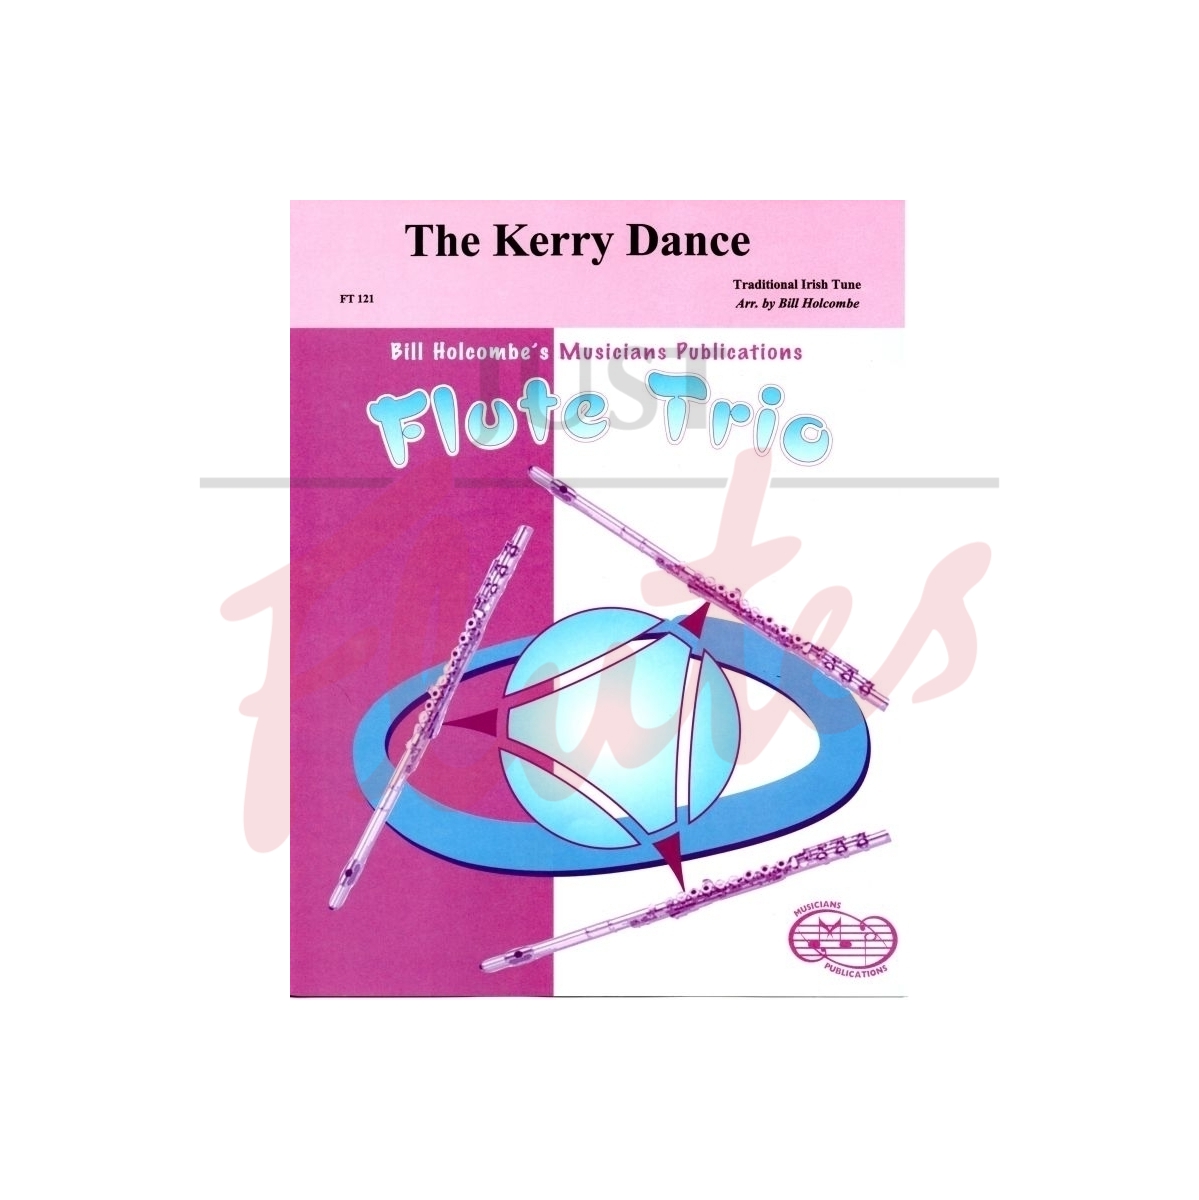 The Kerry Dance [Flute Trio]